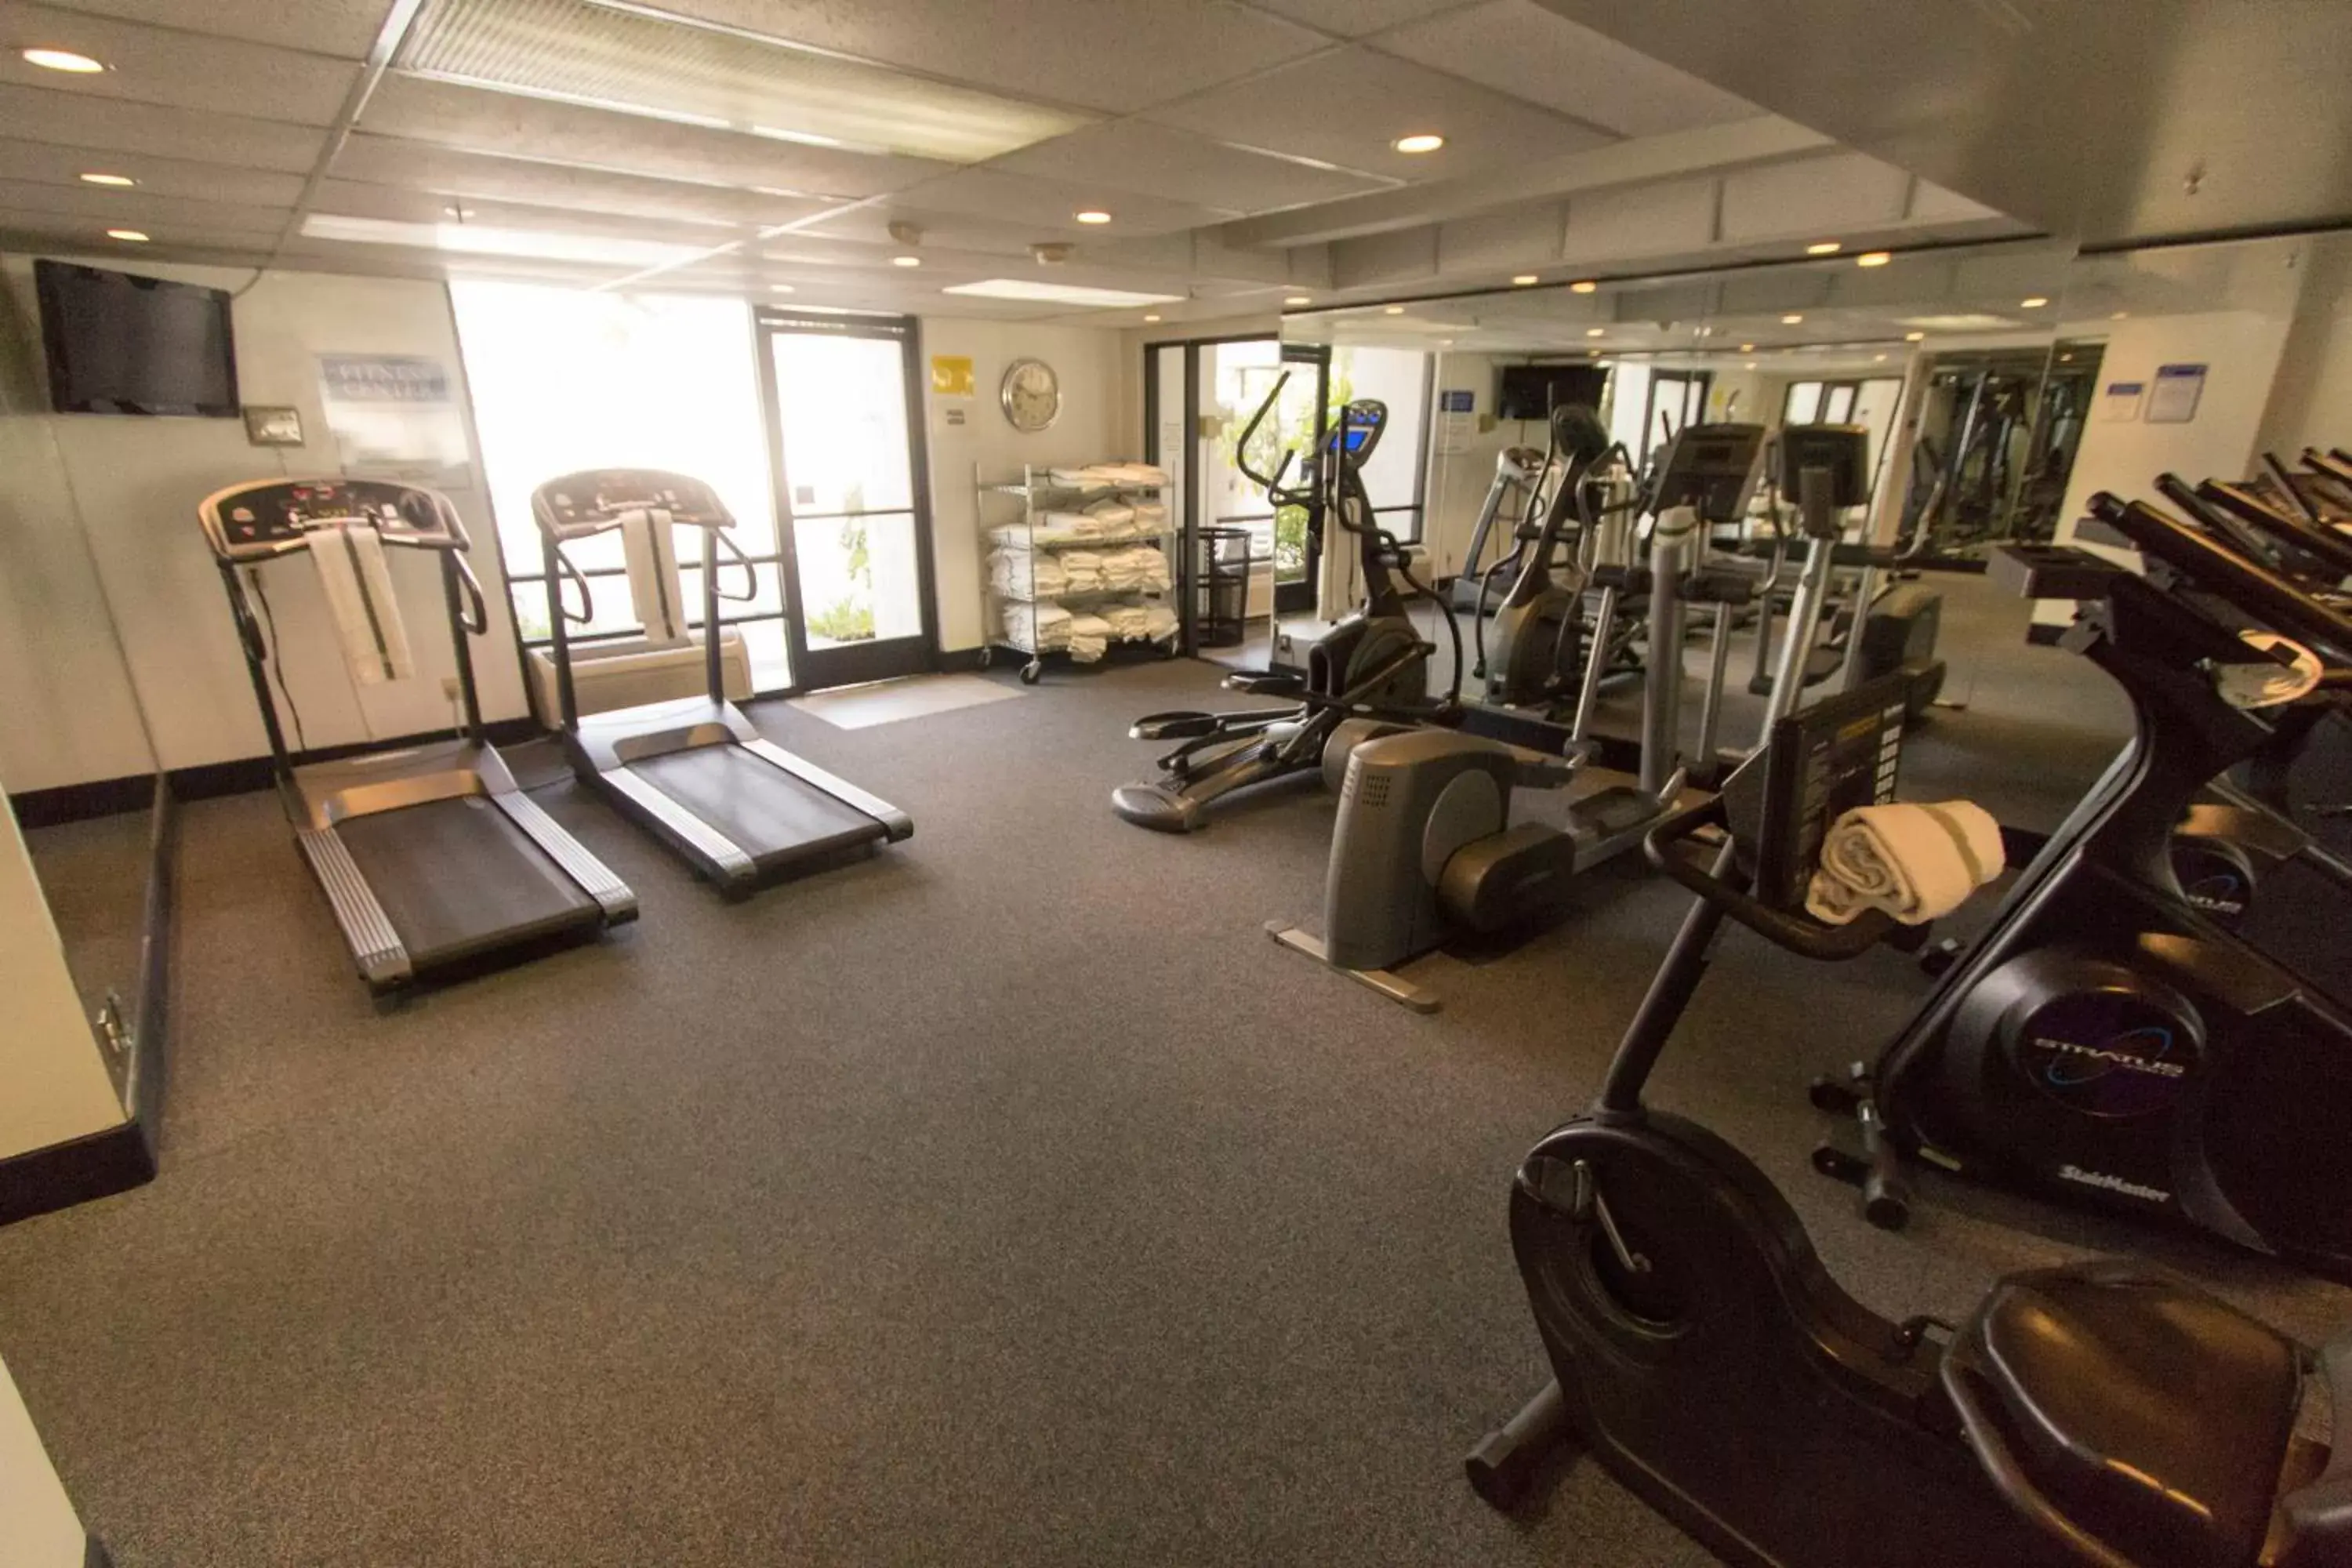 Fitness centre/facilities, Fitness Center/Facilities in Knott's Berry Farm Hotel